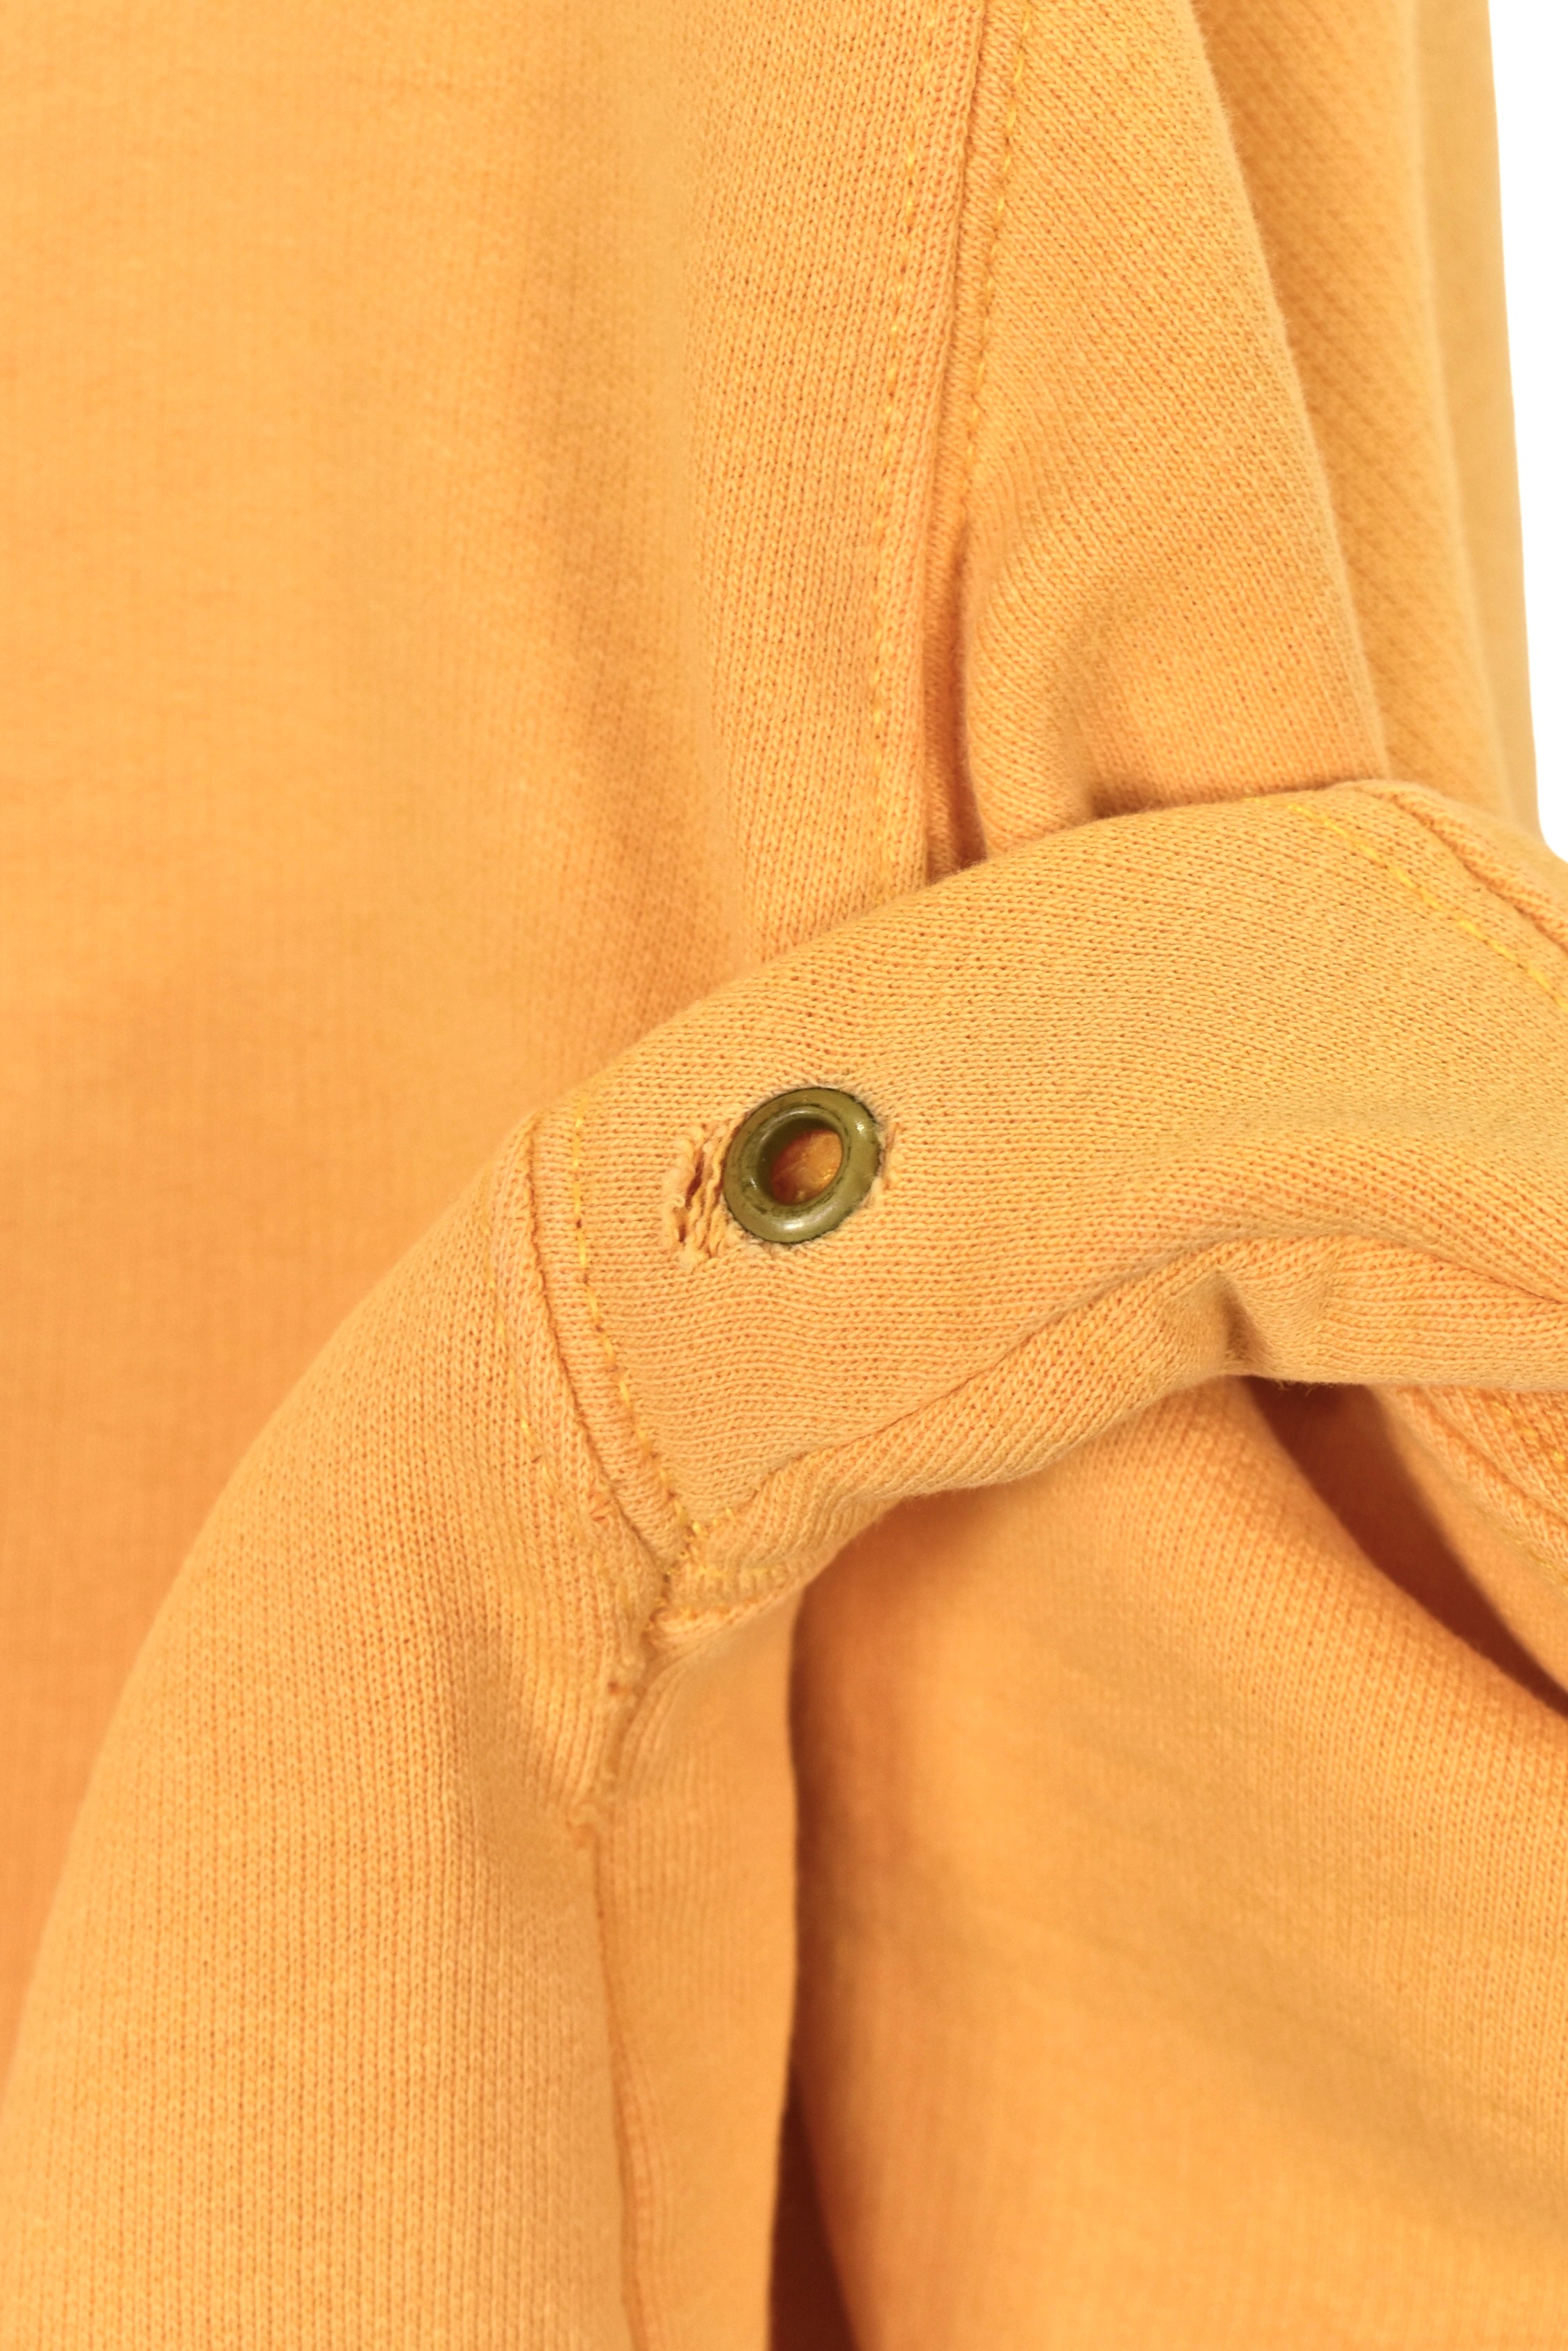 Vintage Timberland sweatshirt, yellow embroidered crewneck - M/L